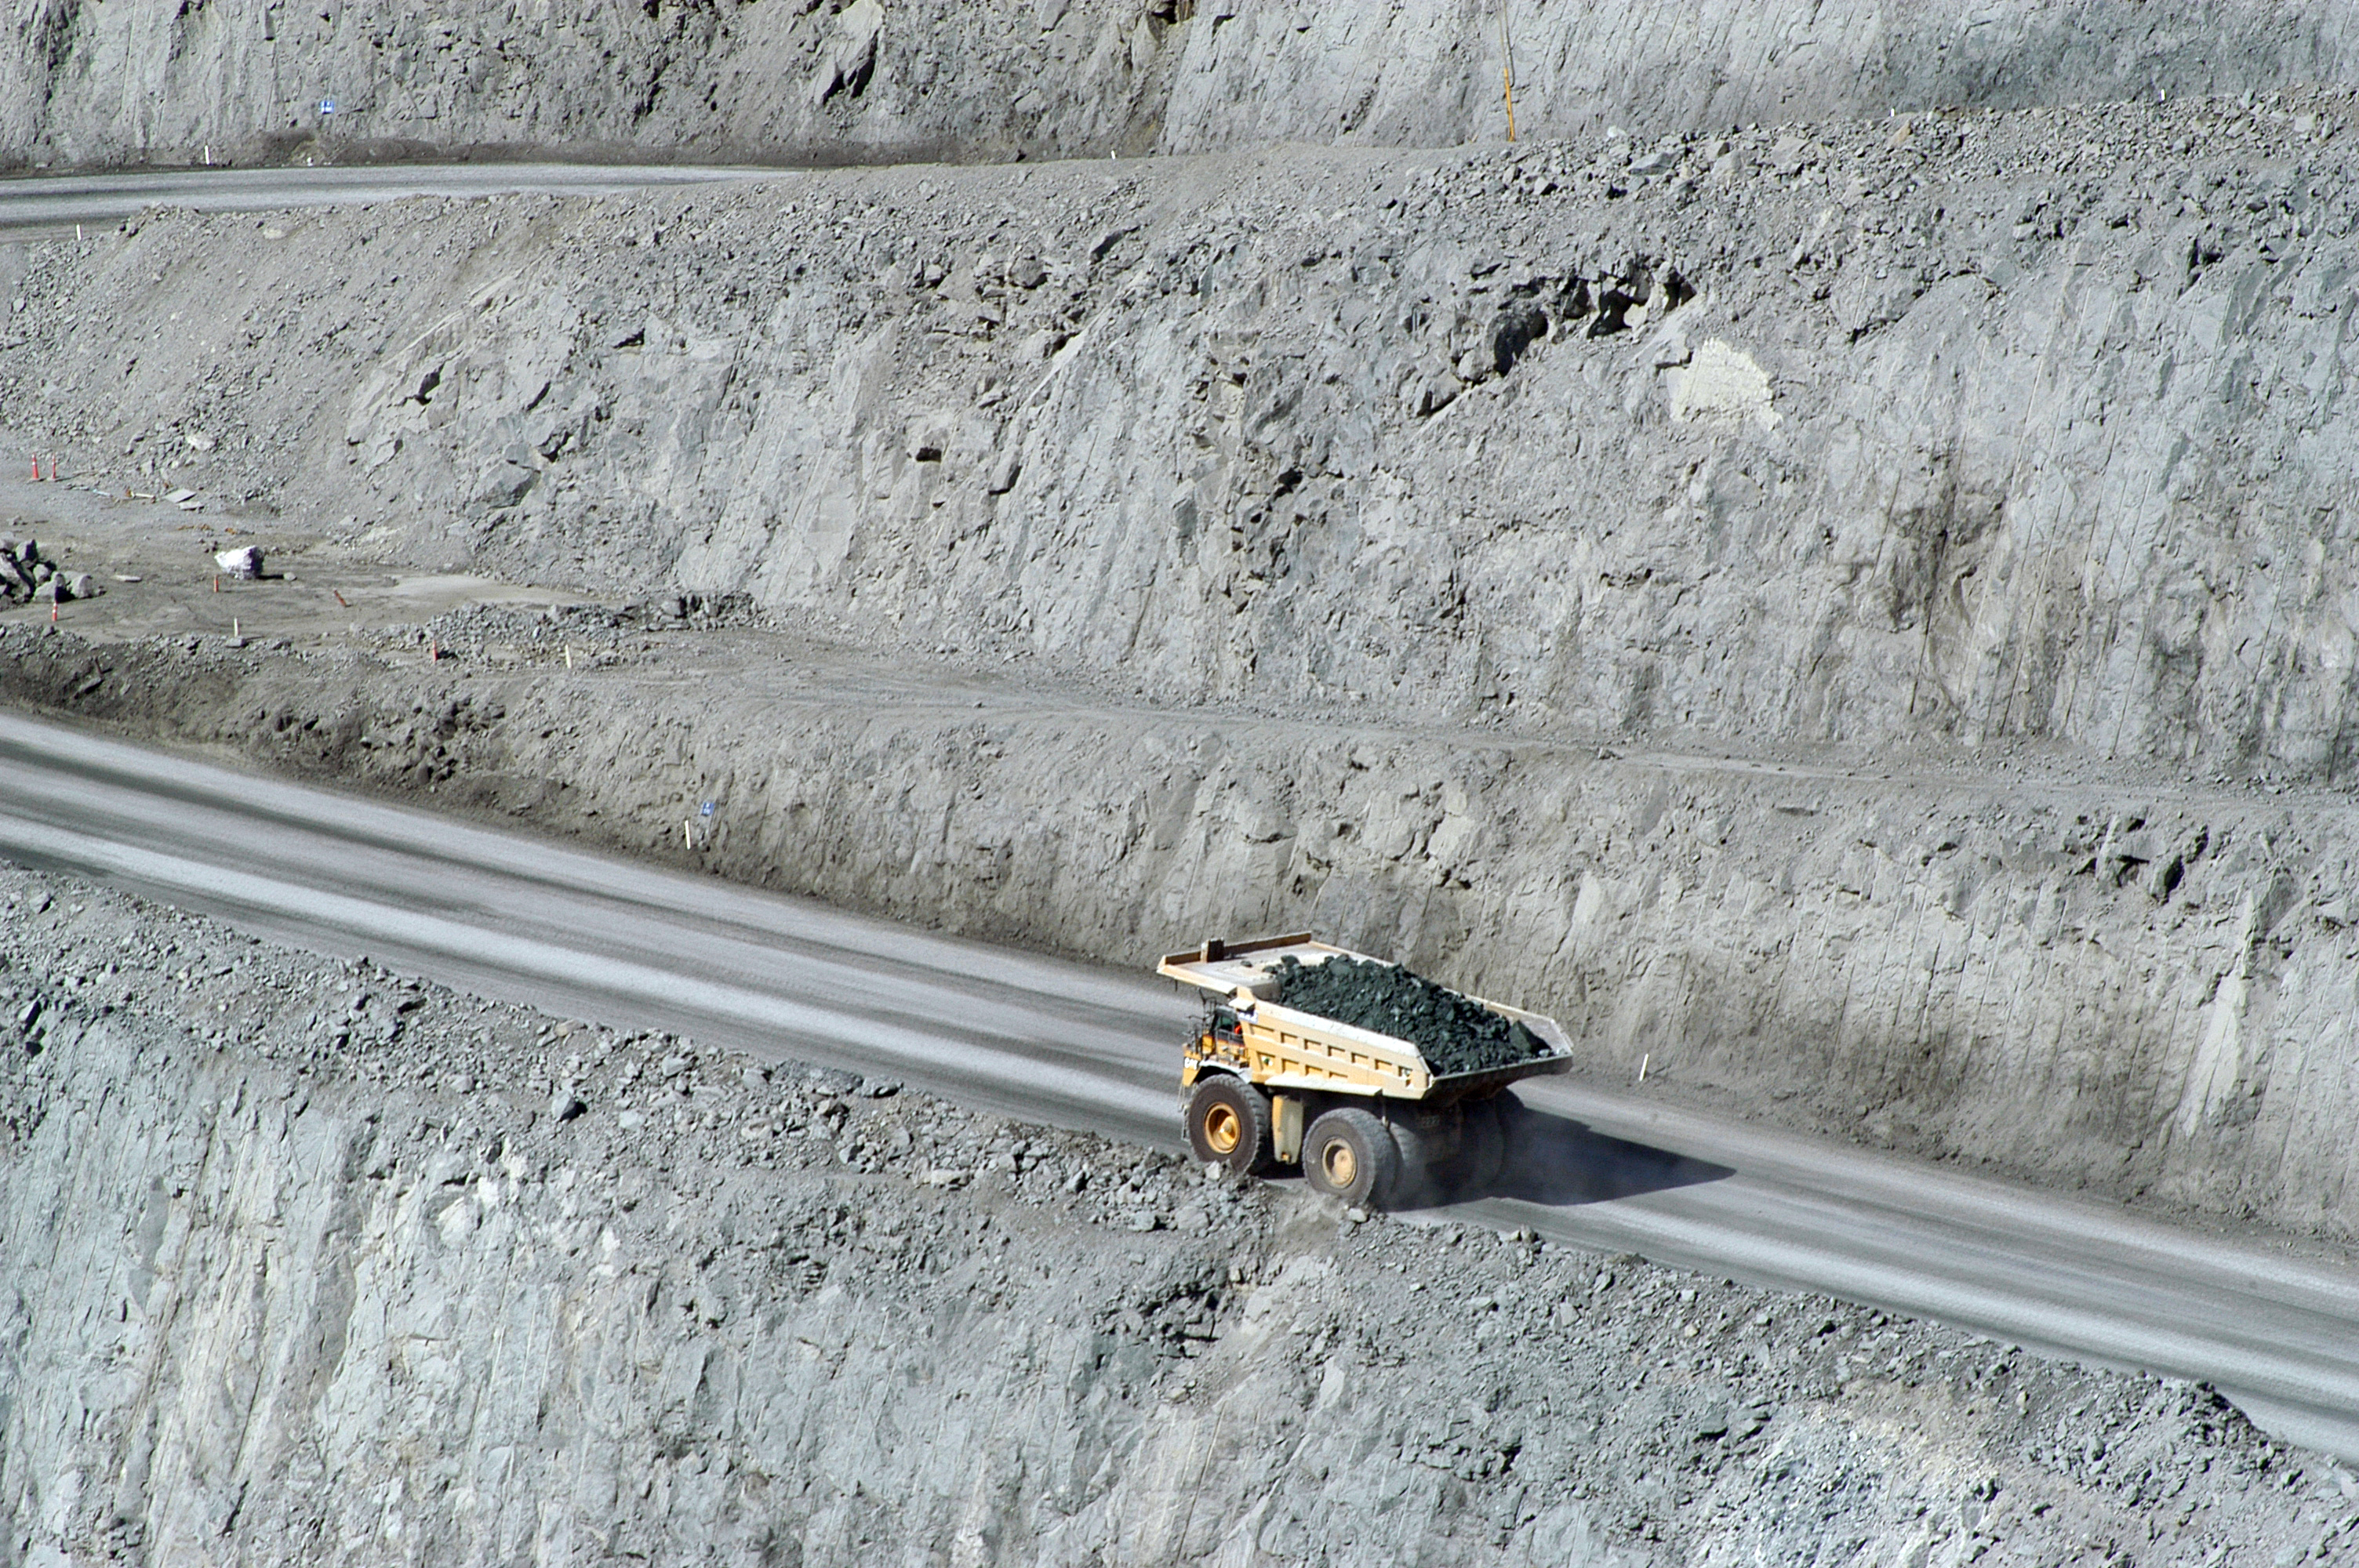 Kalgoorlie mine, built by NRW Contracting